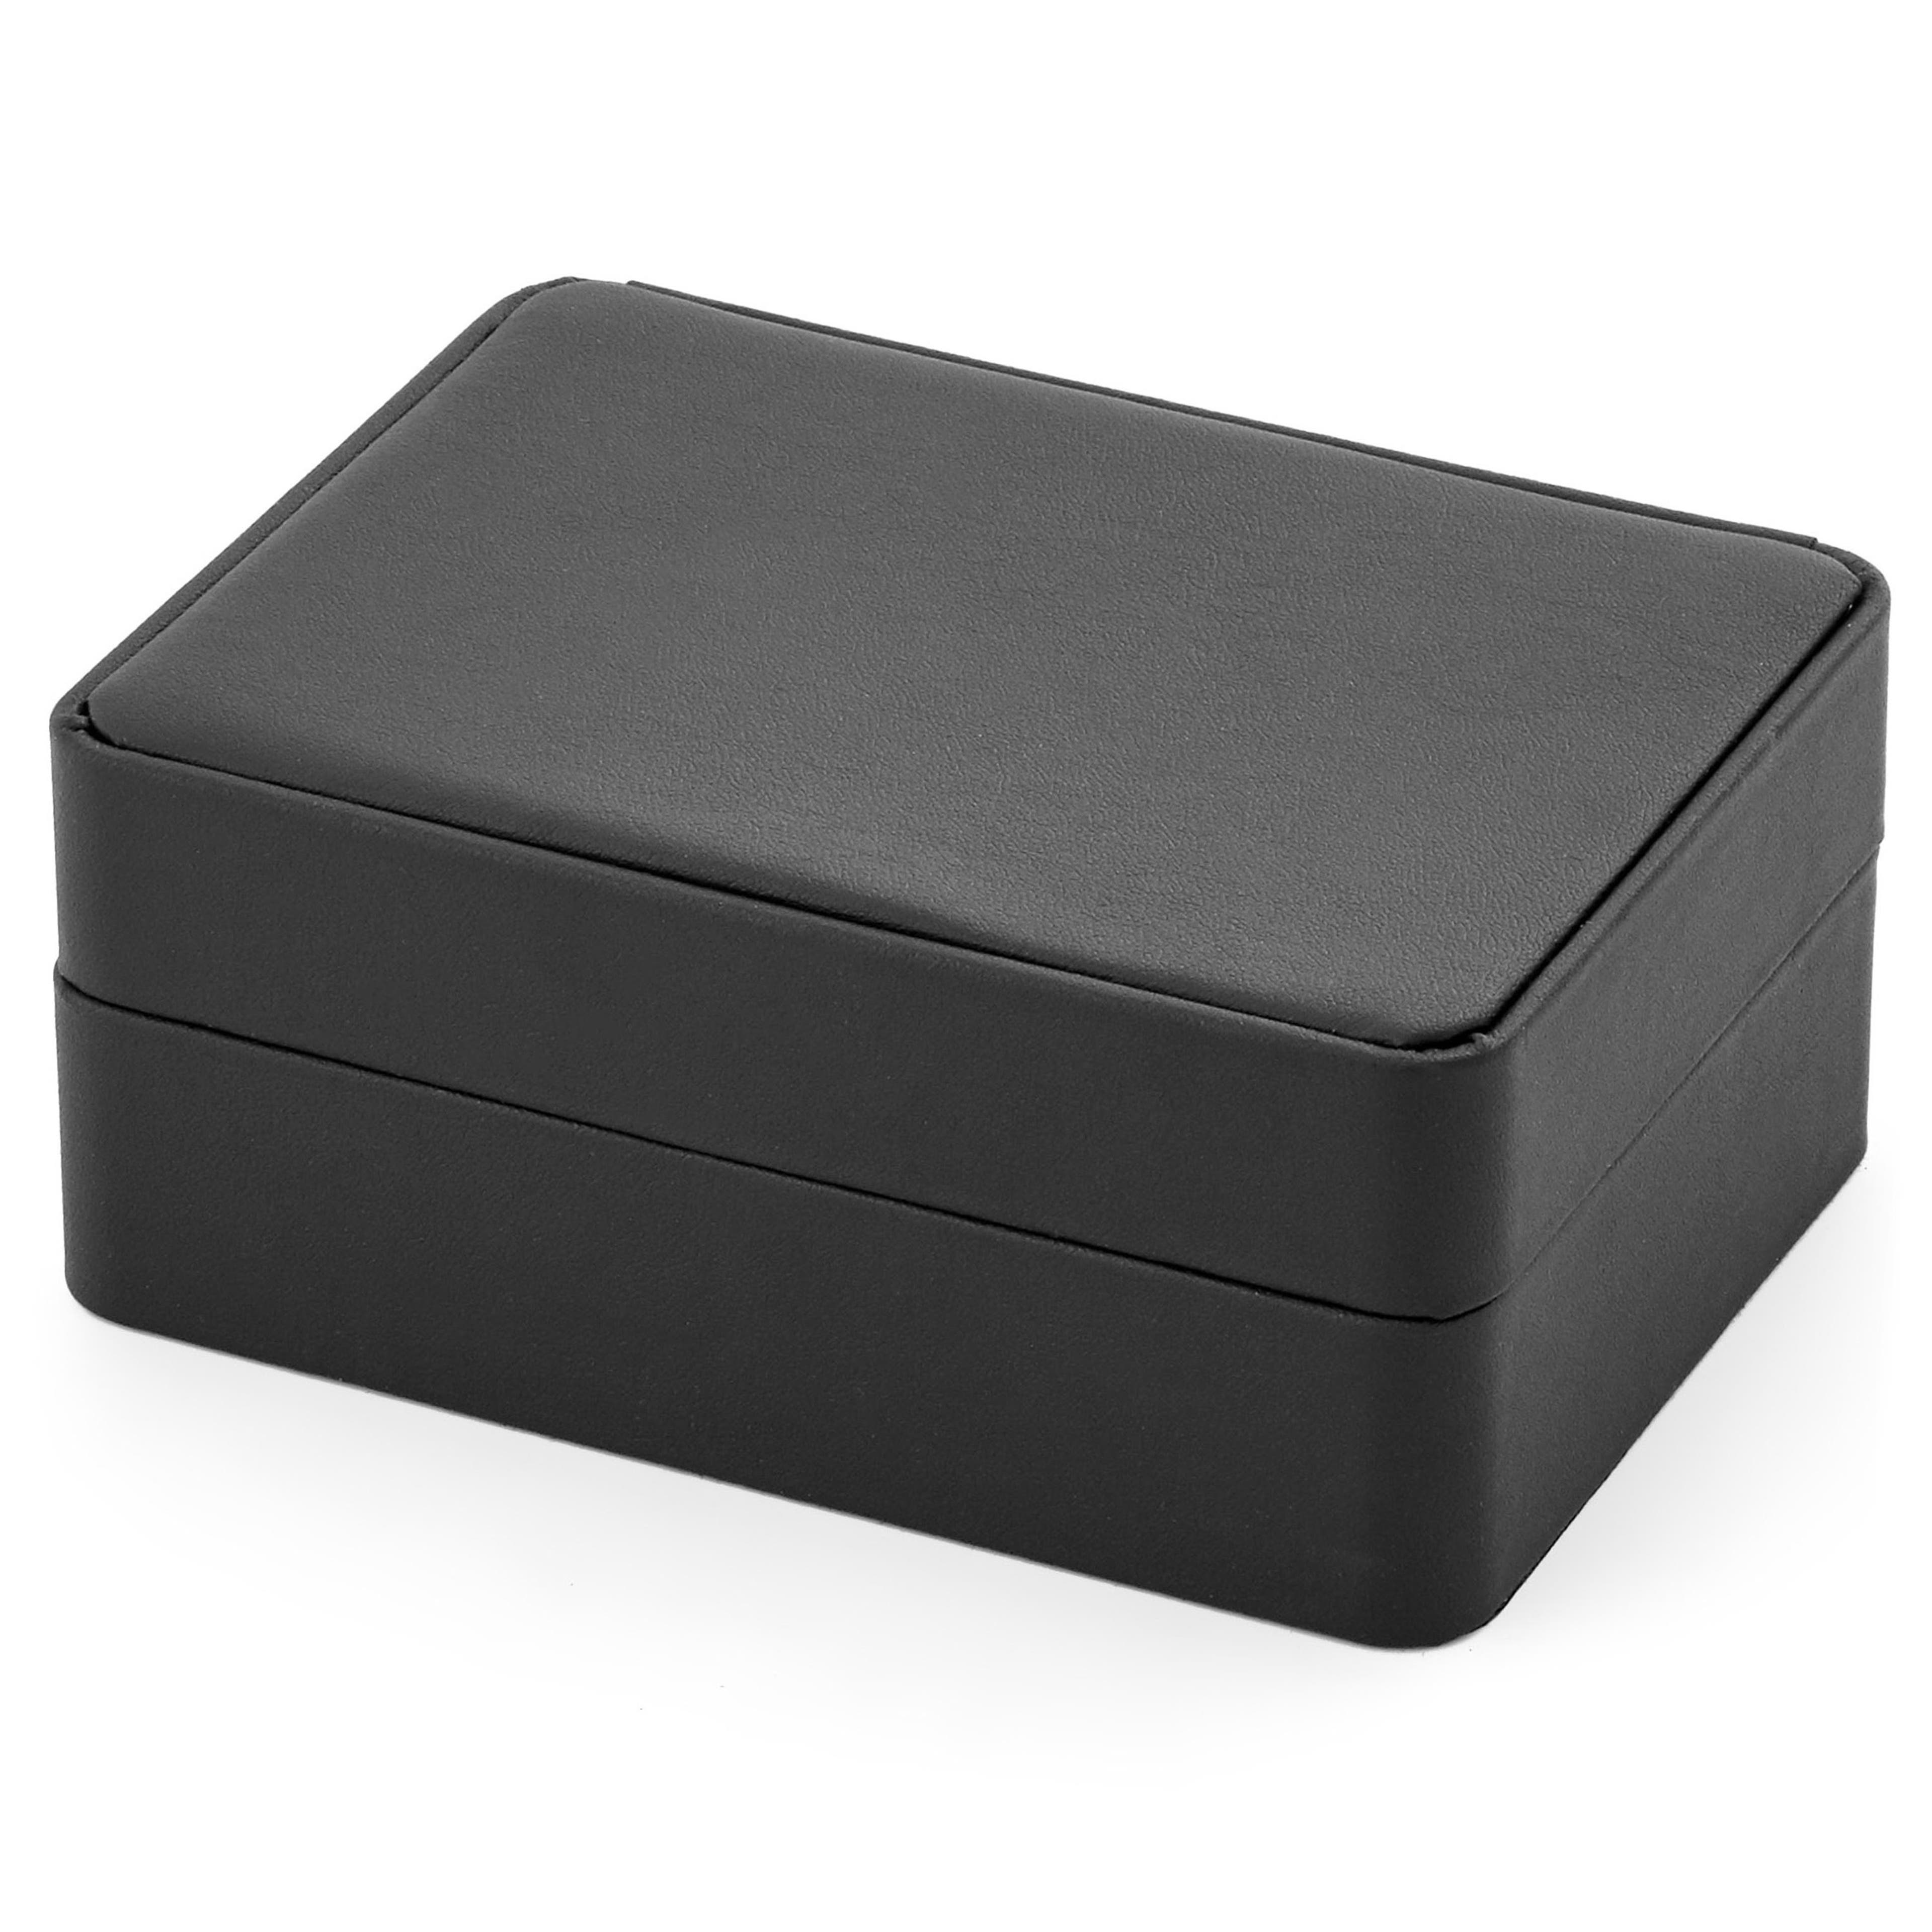 Matte Black PU Leather Cufflinks Box for 6 Cufflink Sets